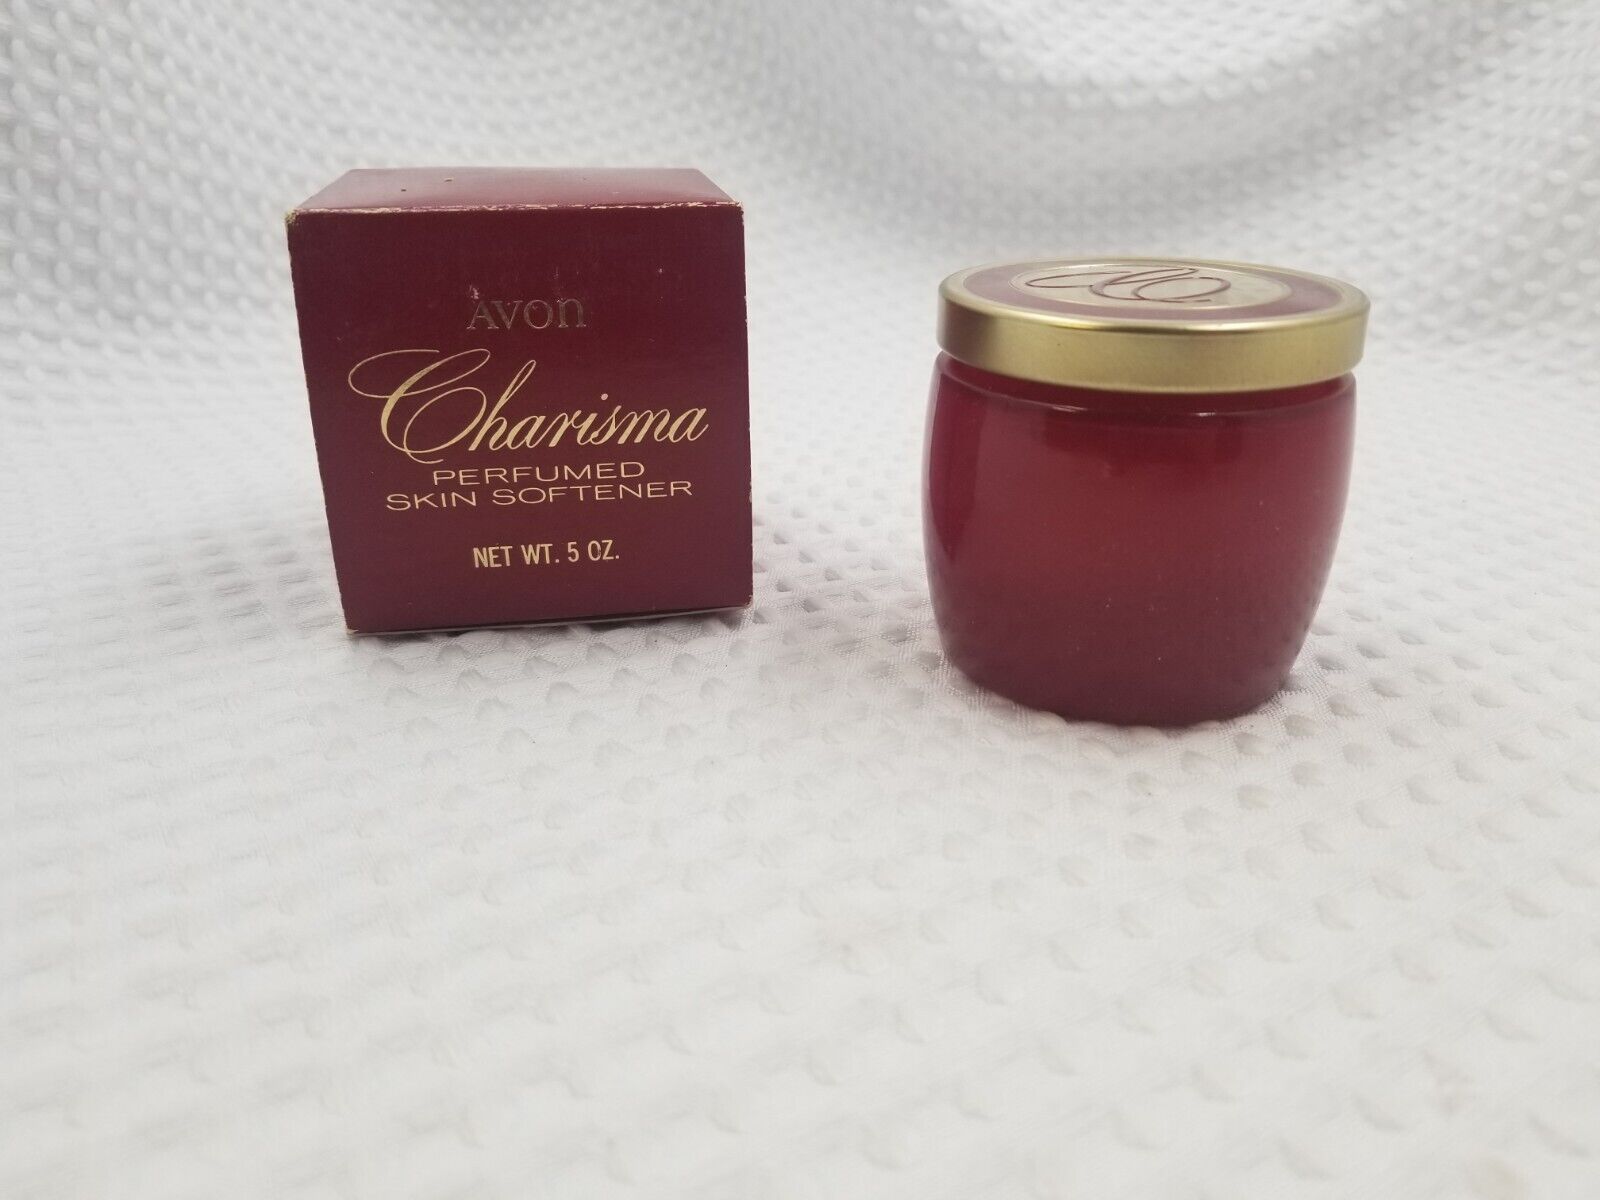 Vintage Avon Charisma Perfumed Skin Softener NOS NIB - Full But Expired Product